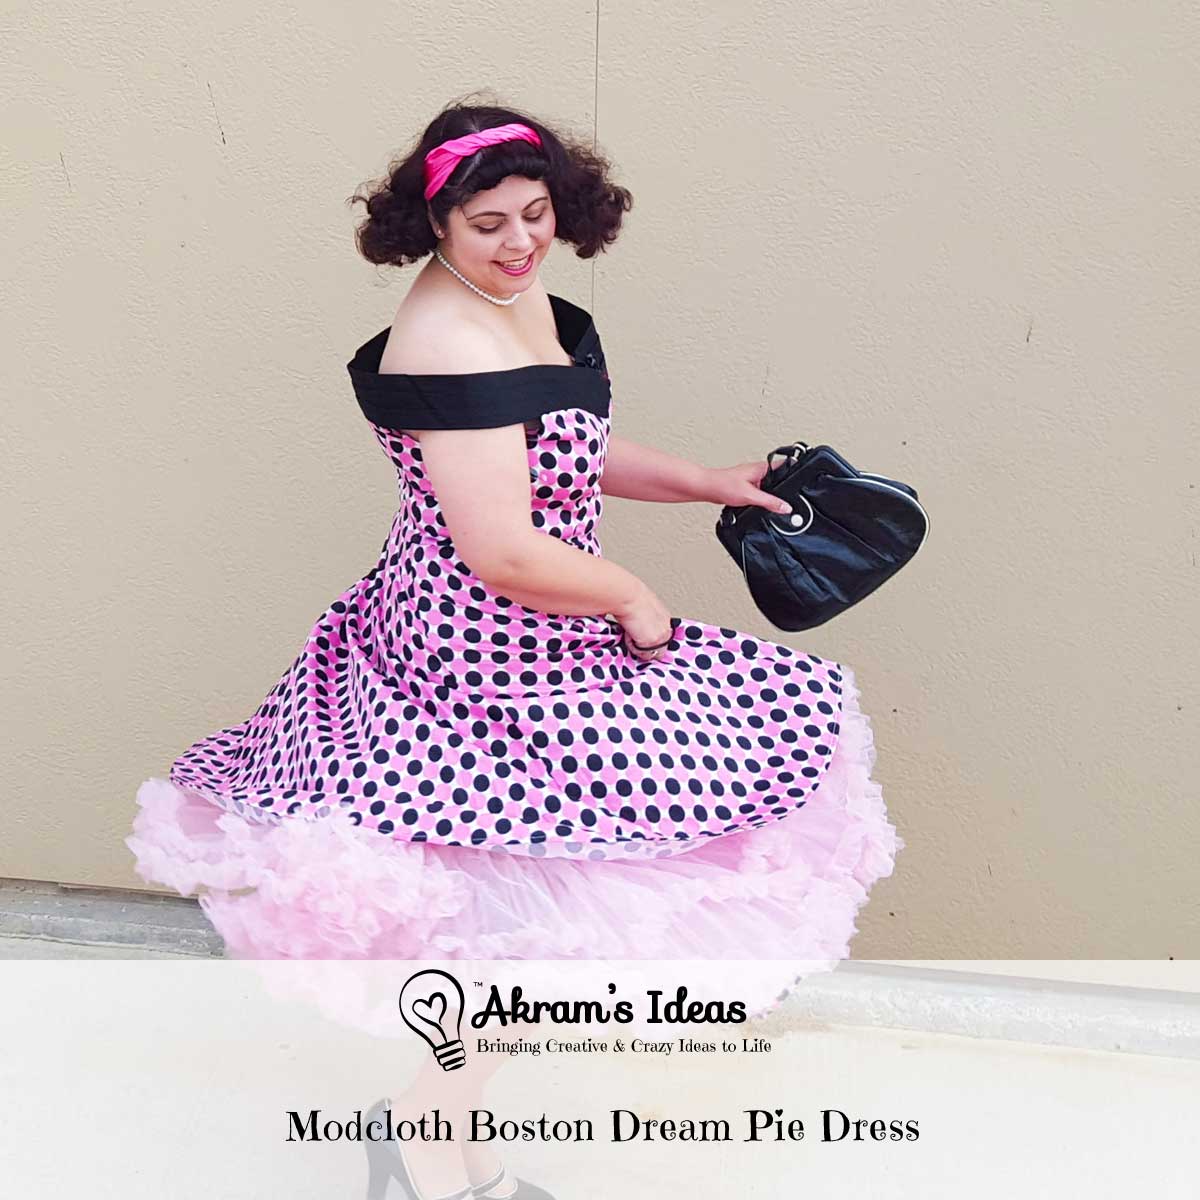 Akram's Ideas: Modcloth Boston Dream Pie Dress